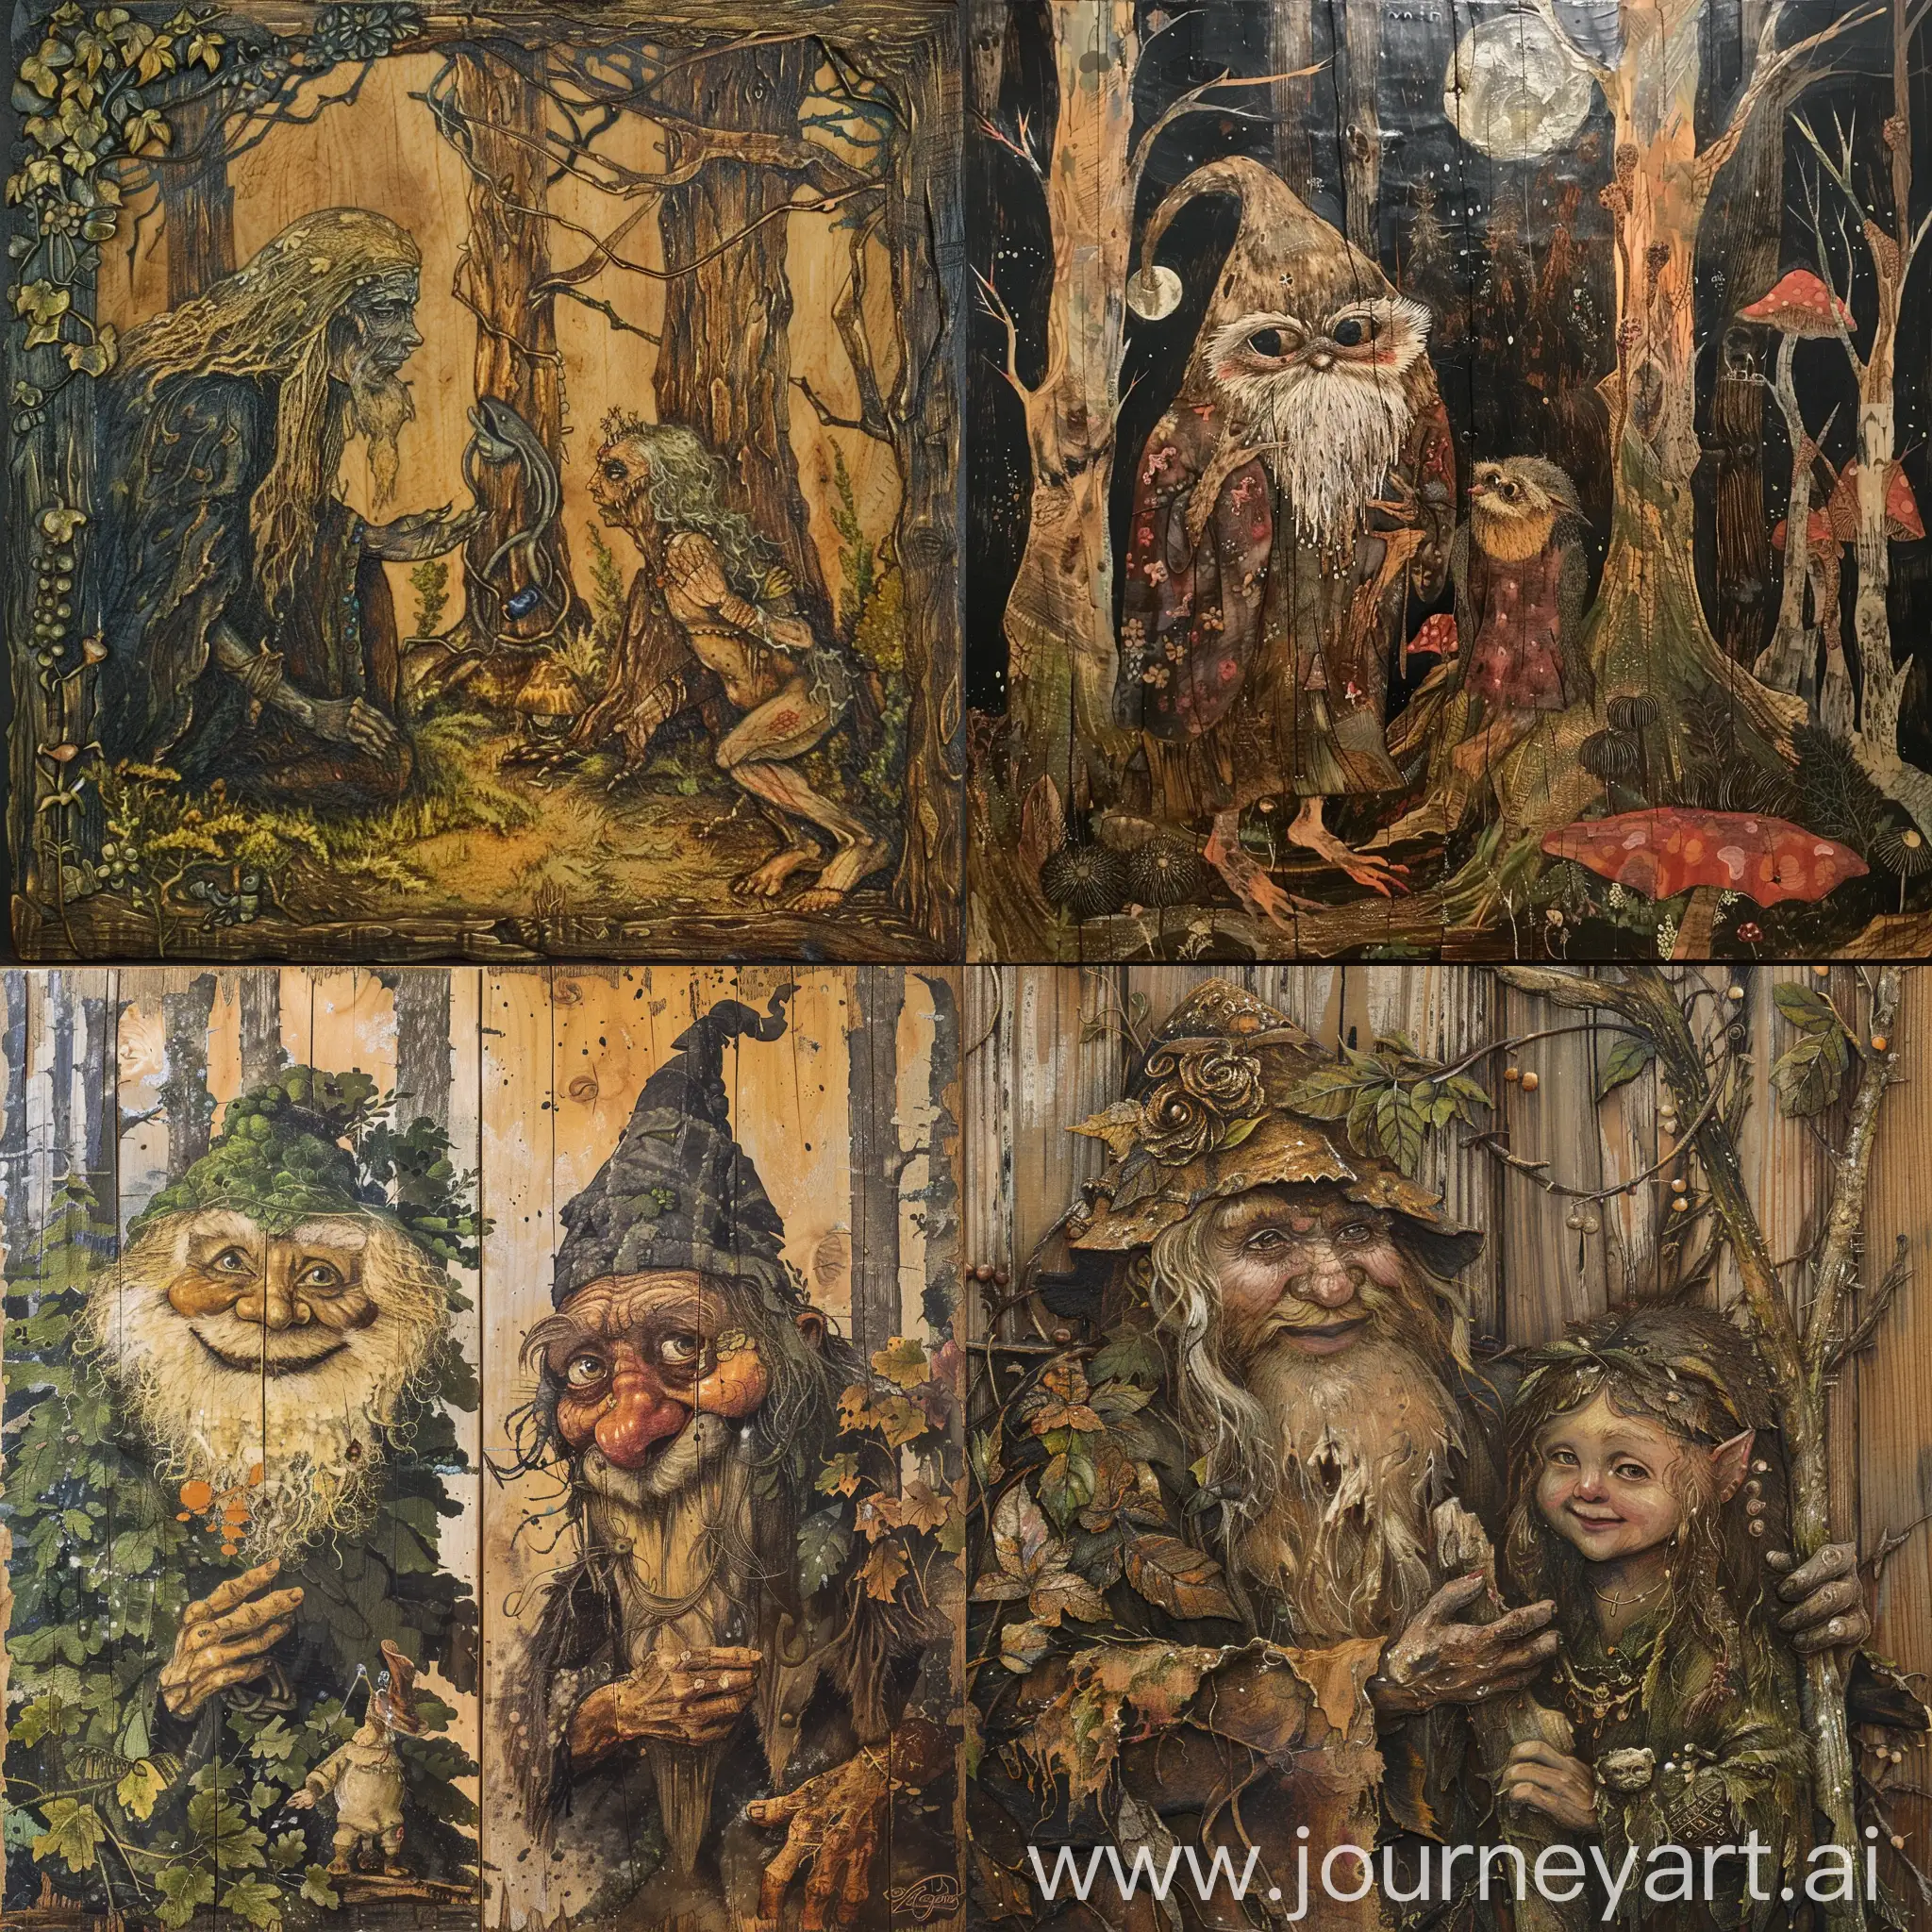 Mystical-Forest-Spirits-Meeting-of-Baba-Yaga-and-Kikimora-on-Wooden-Panel